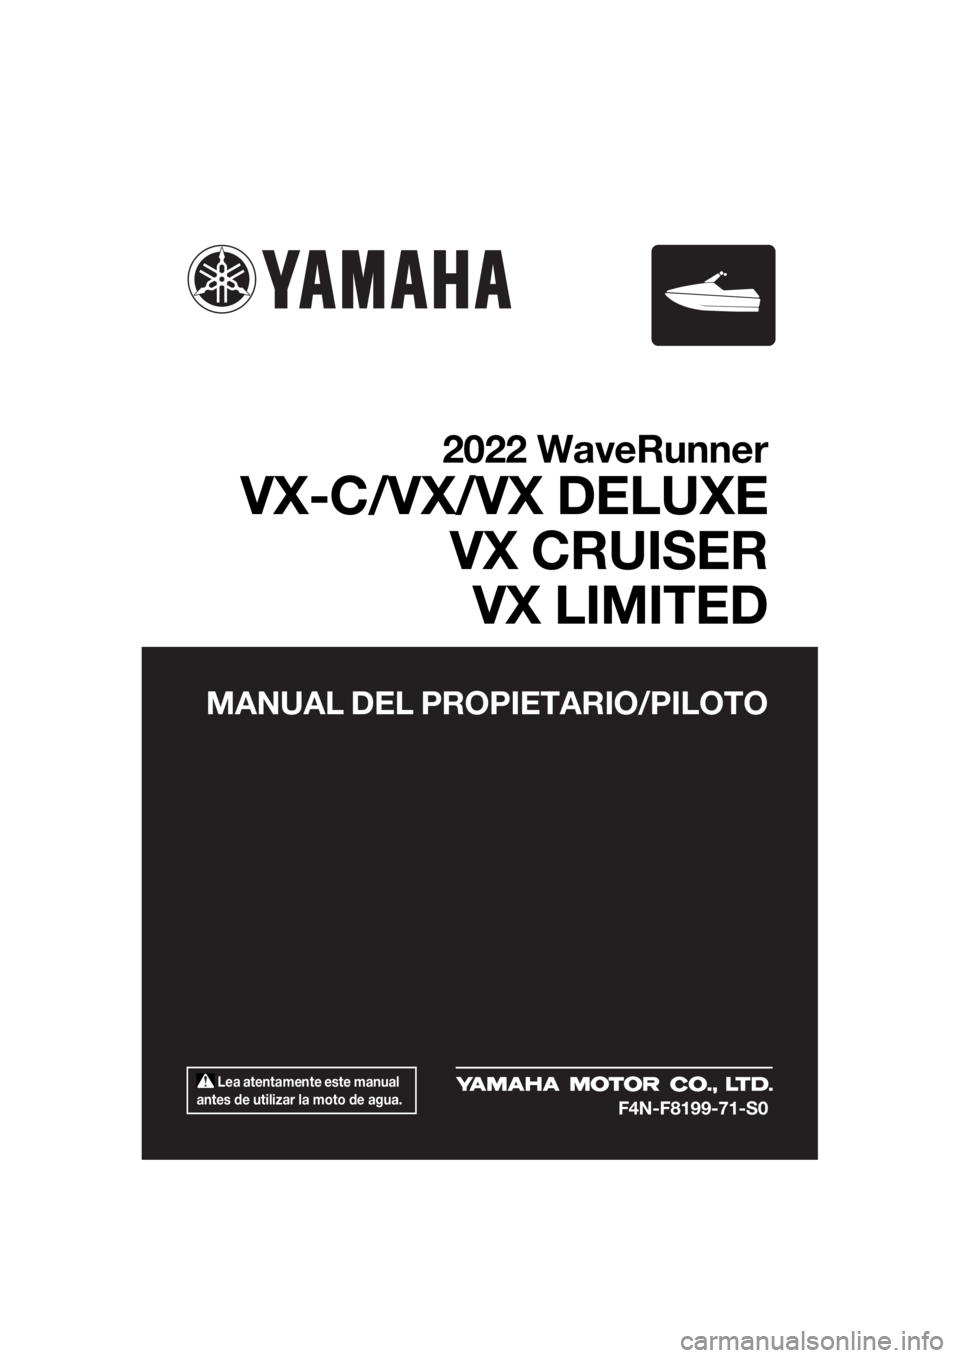 YAMAHA VX 2022  Manuale de Empleo (in Spanish) 